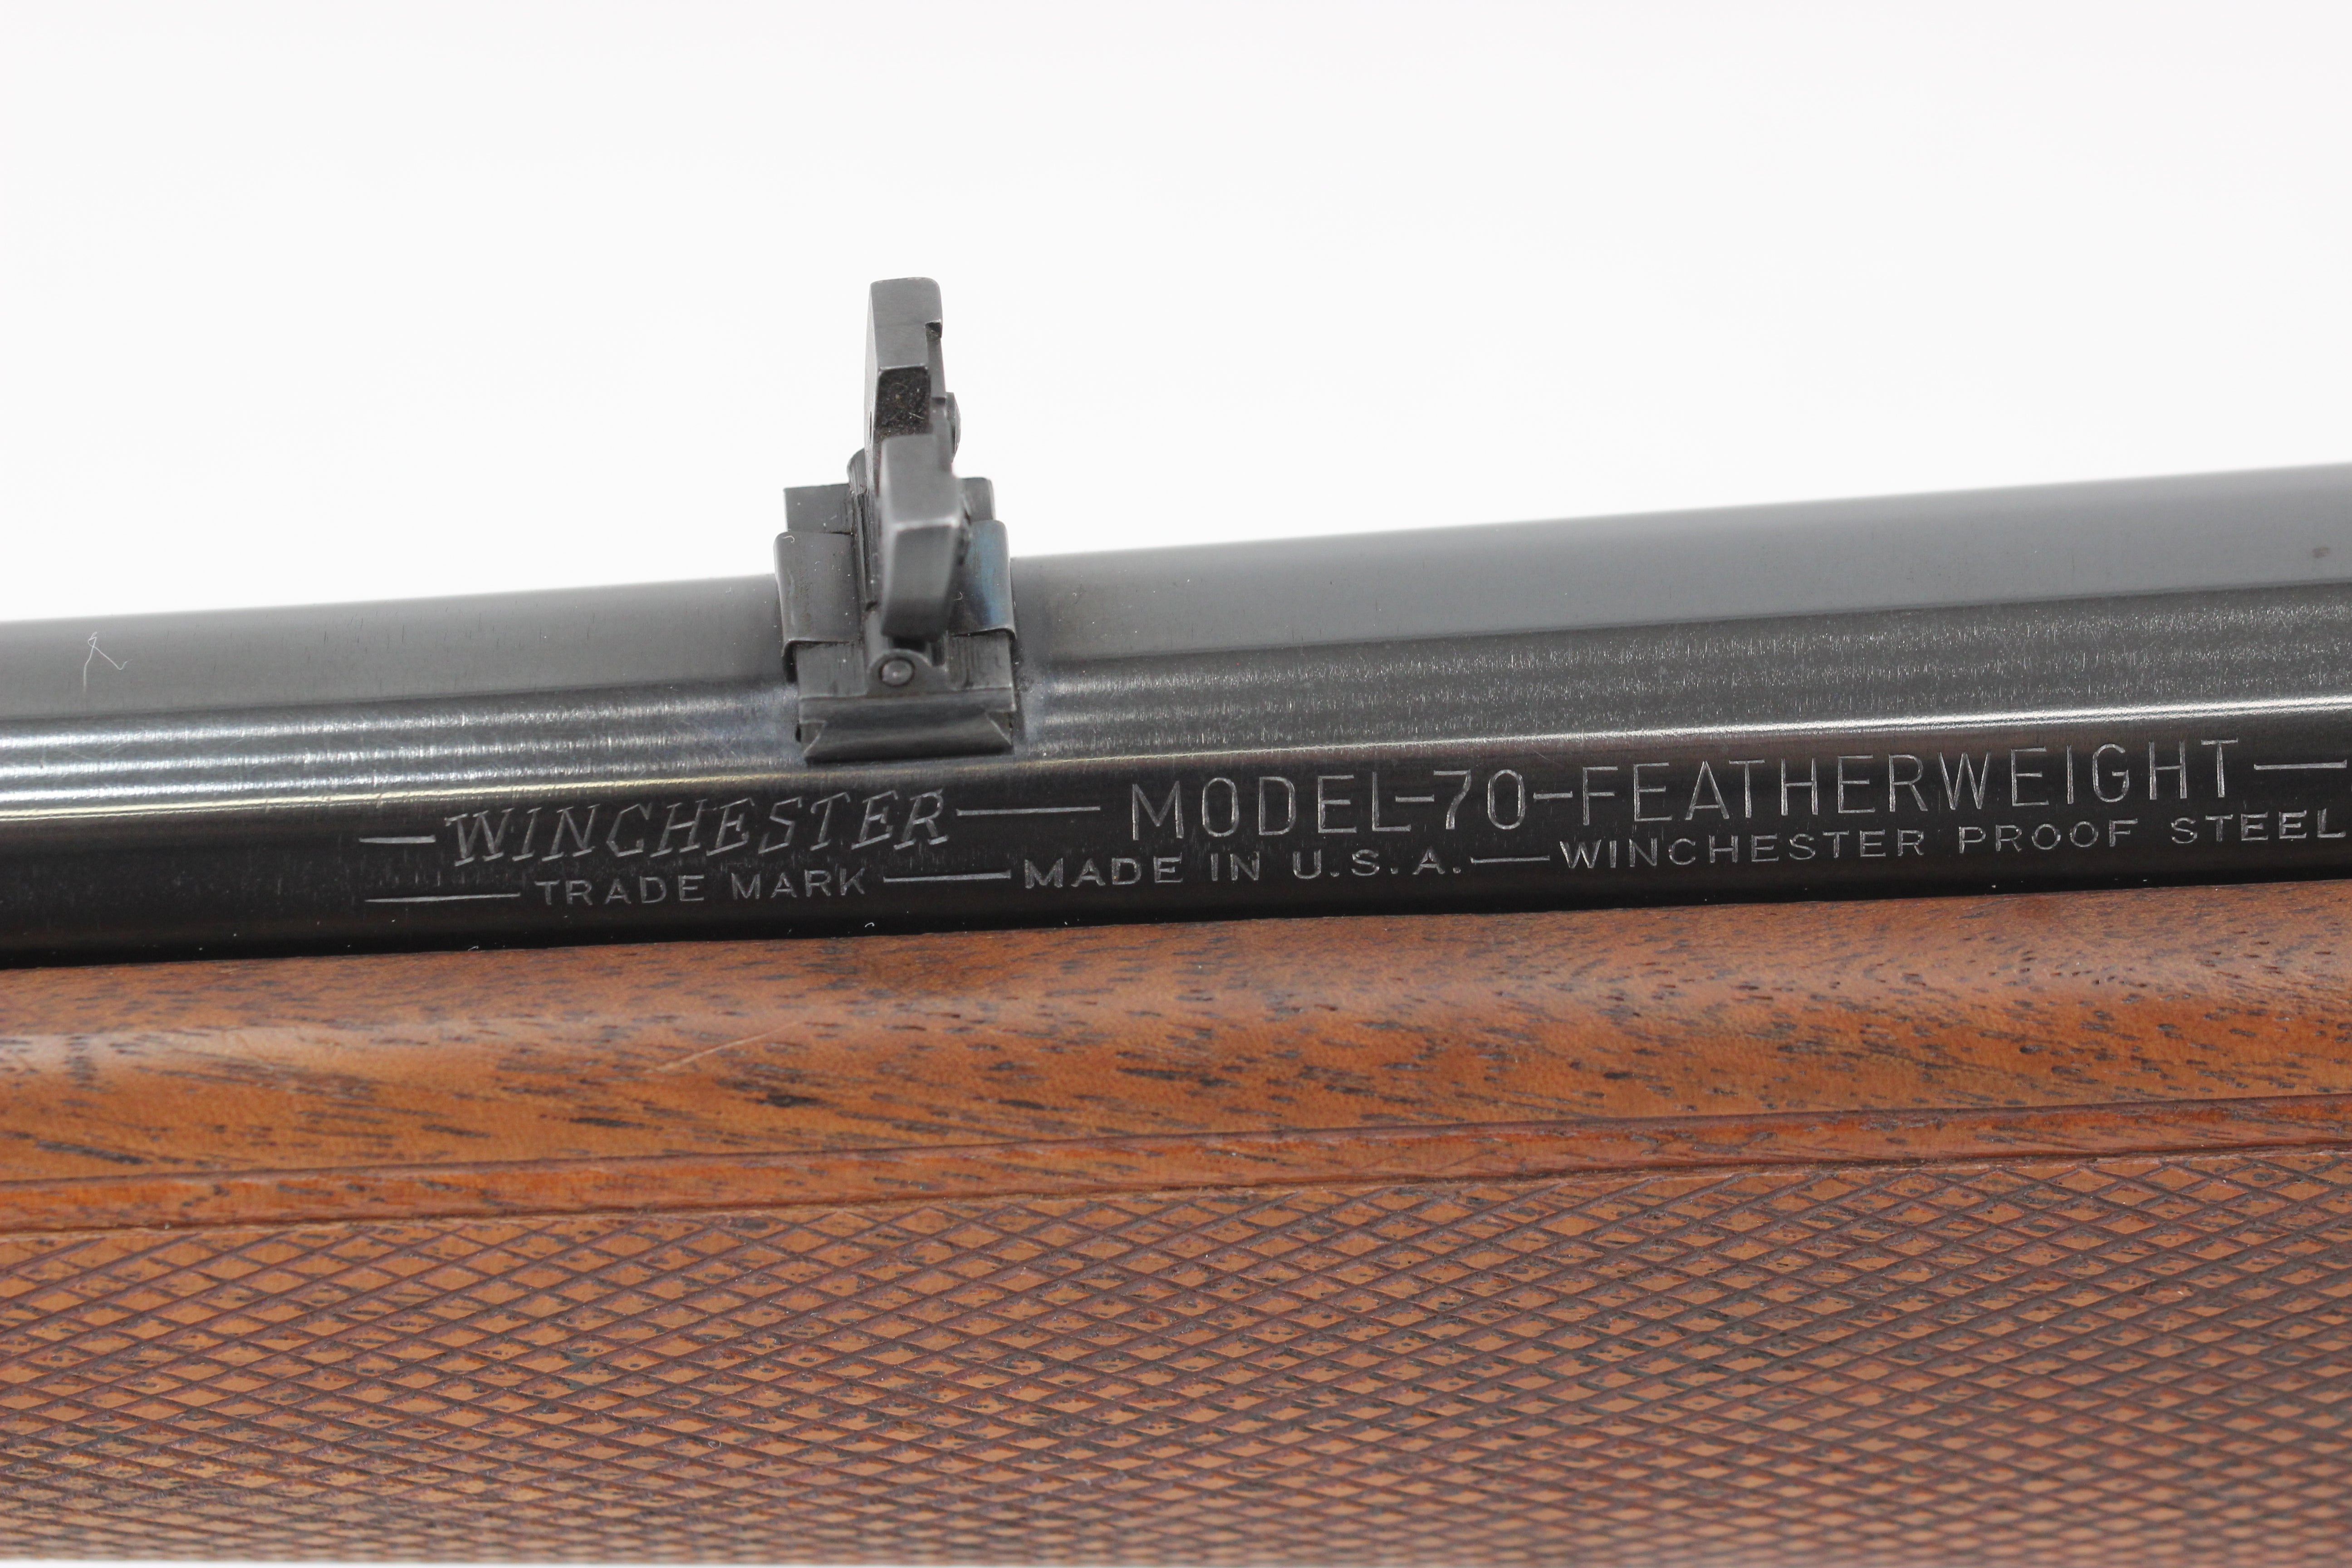 .270 Win Featherweight Rifle - 1956